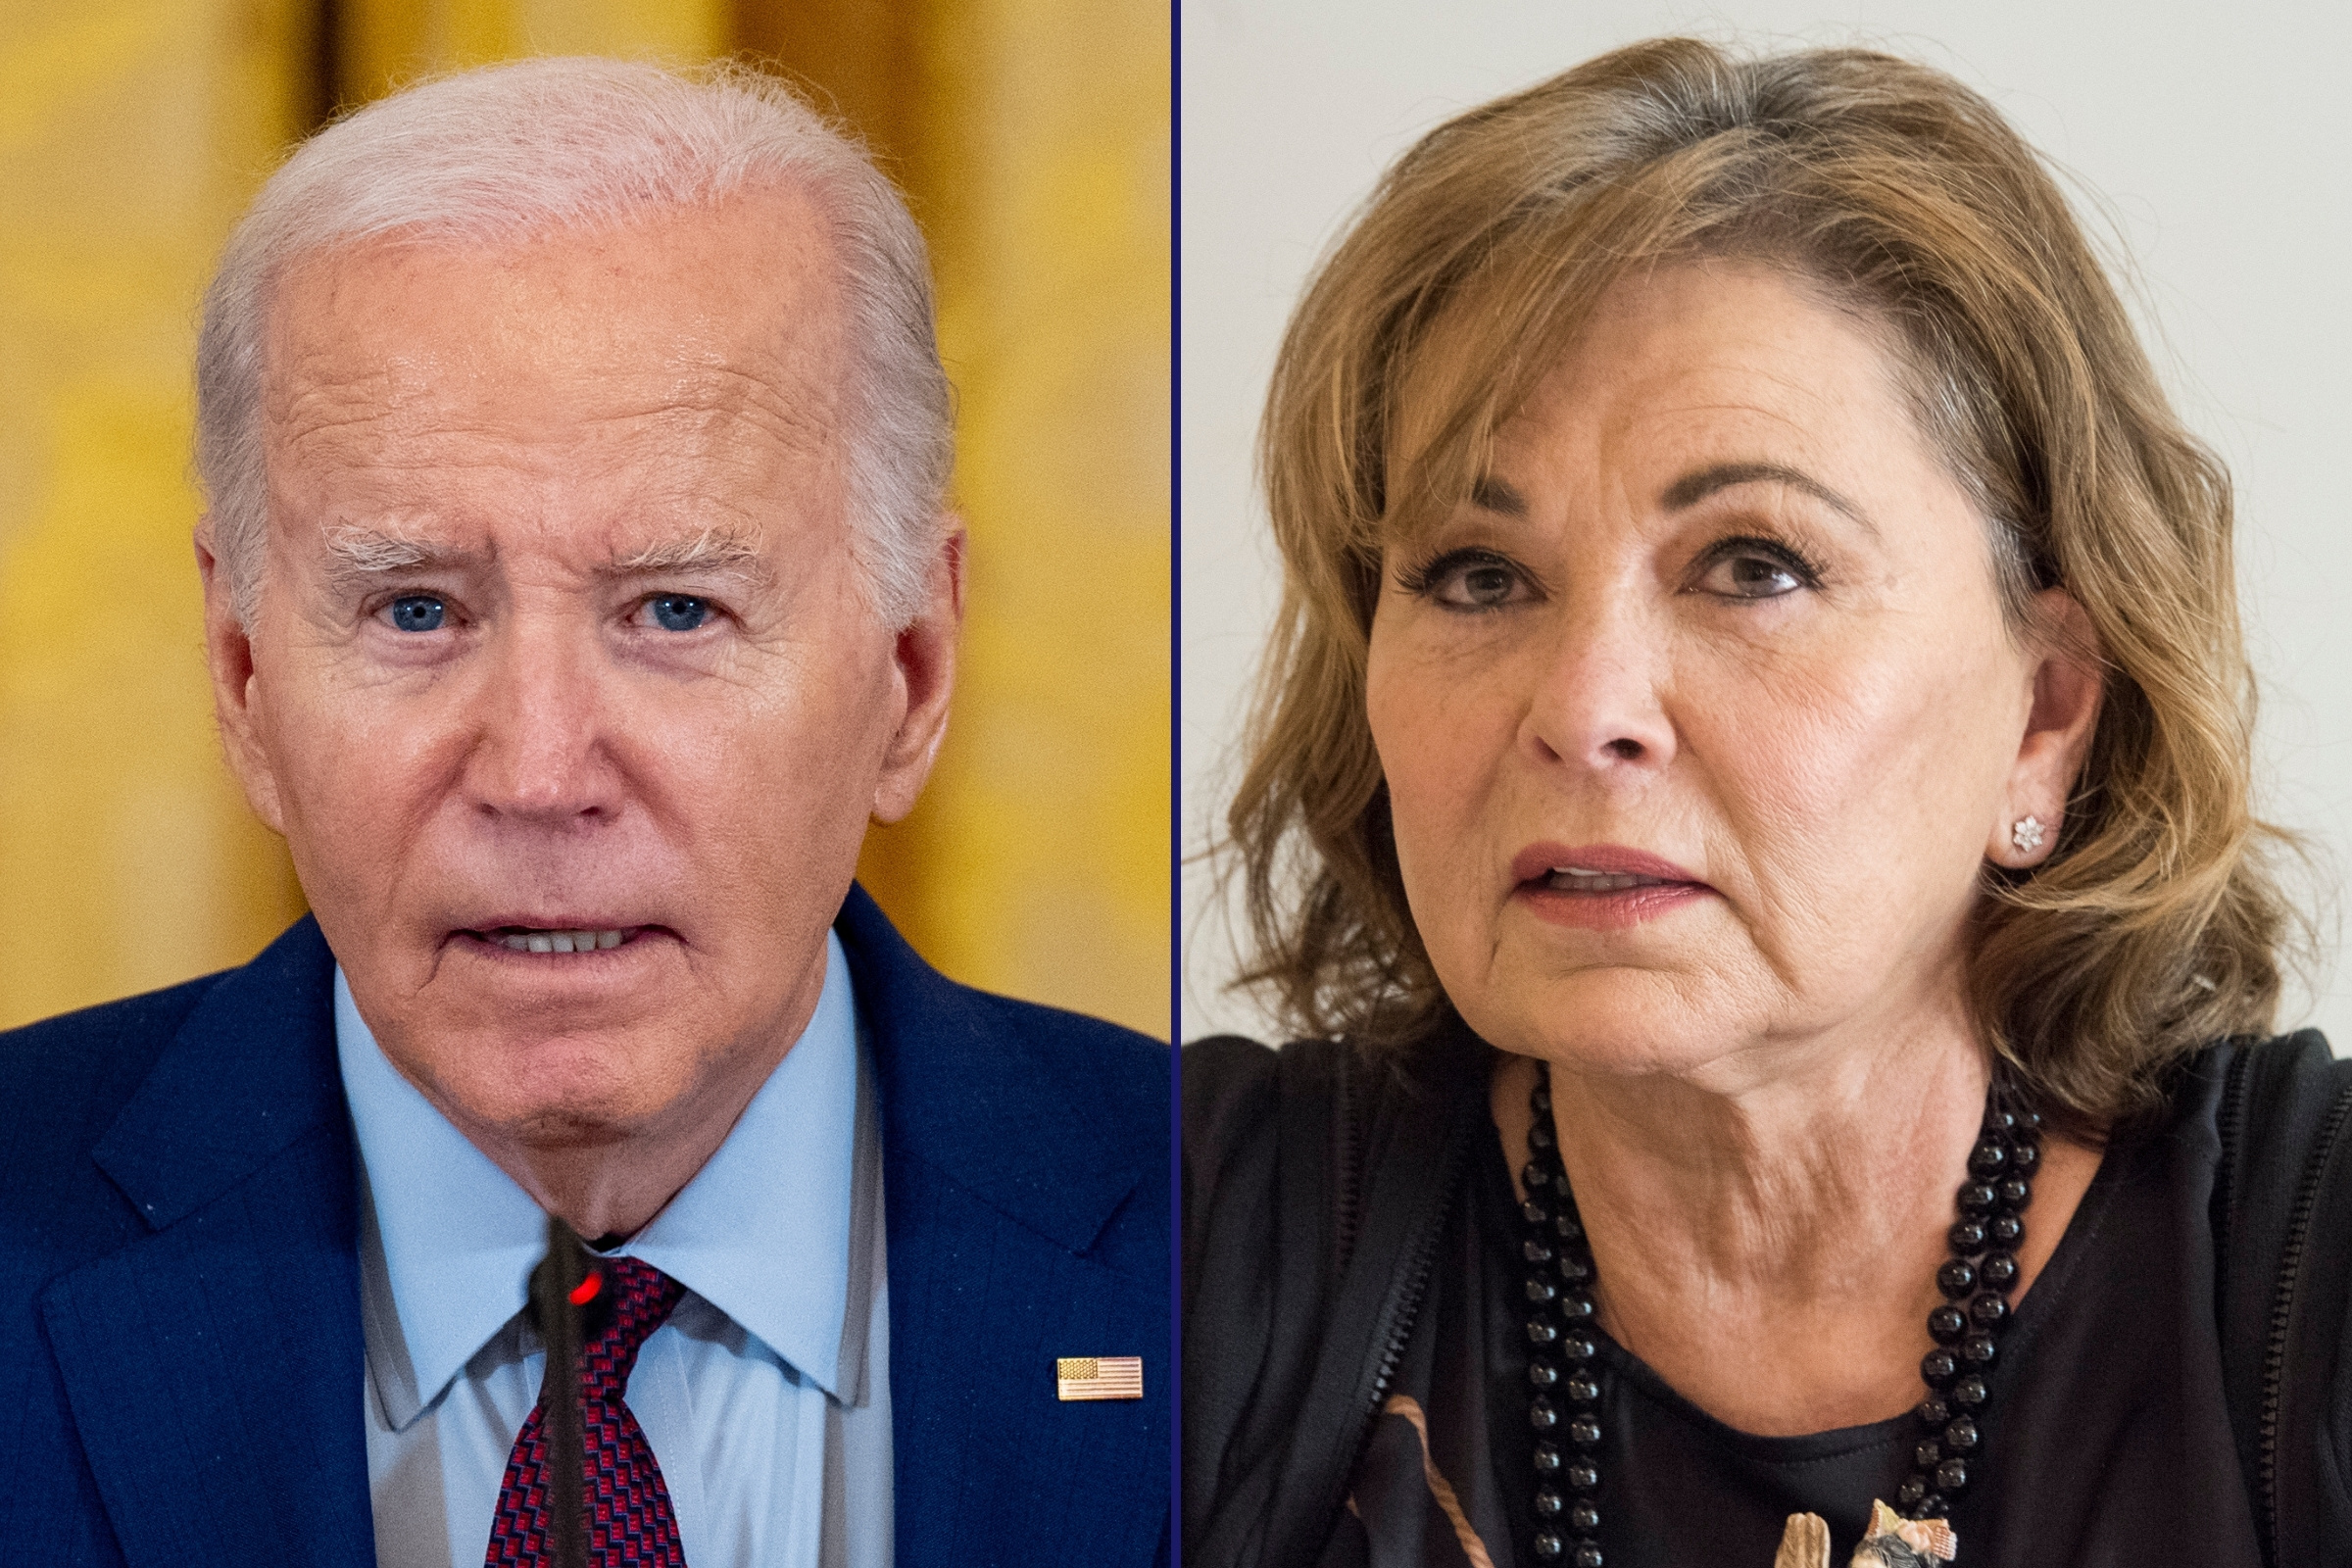 Roseanne Barr’s Joe Biden remarks spark fury